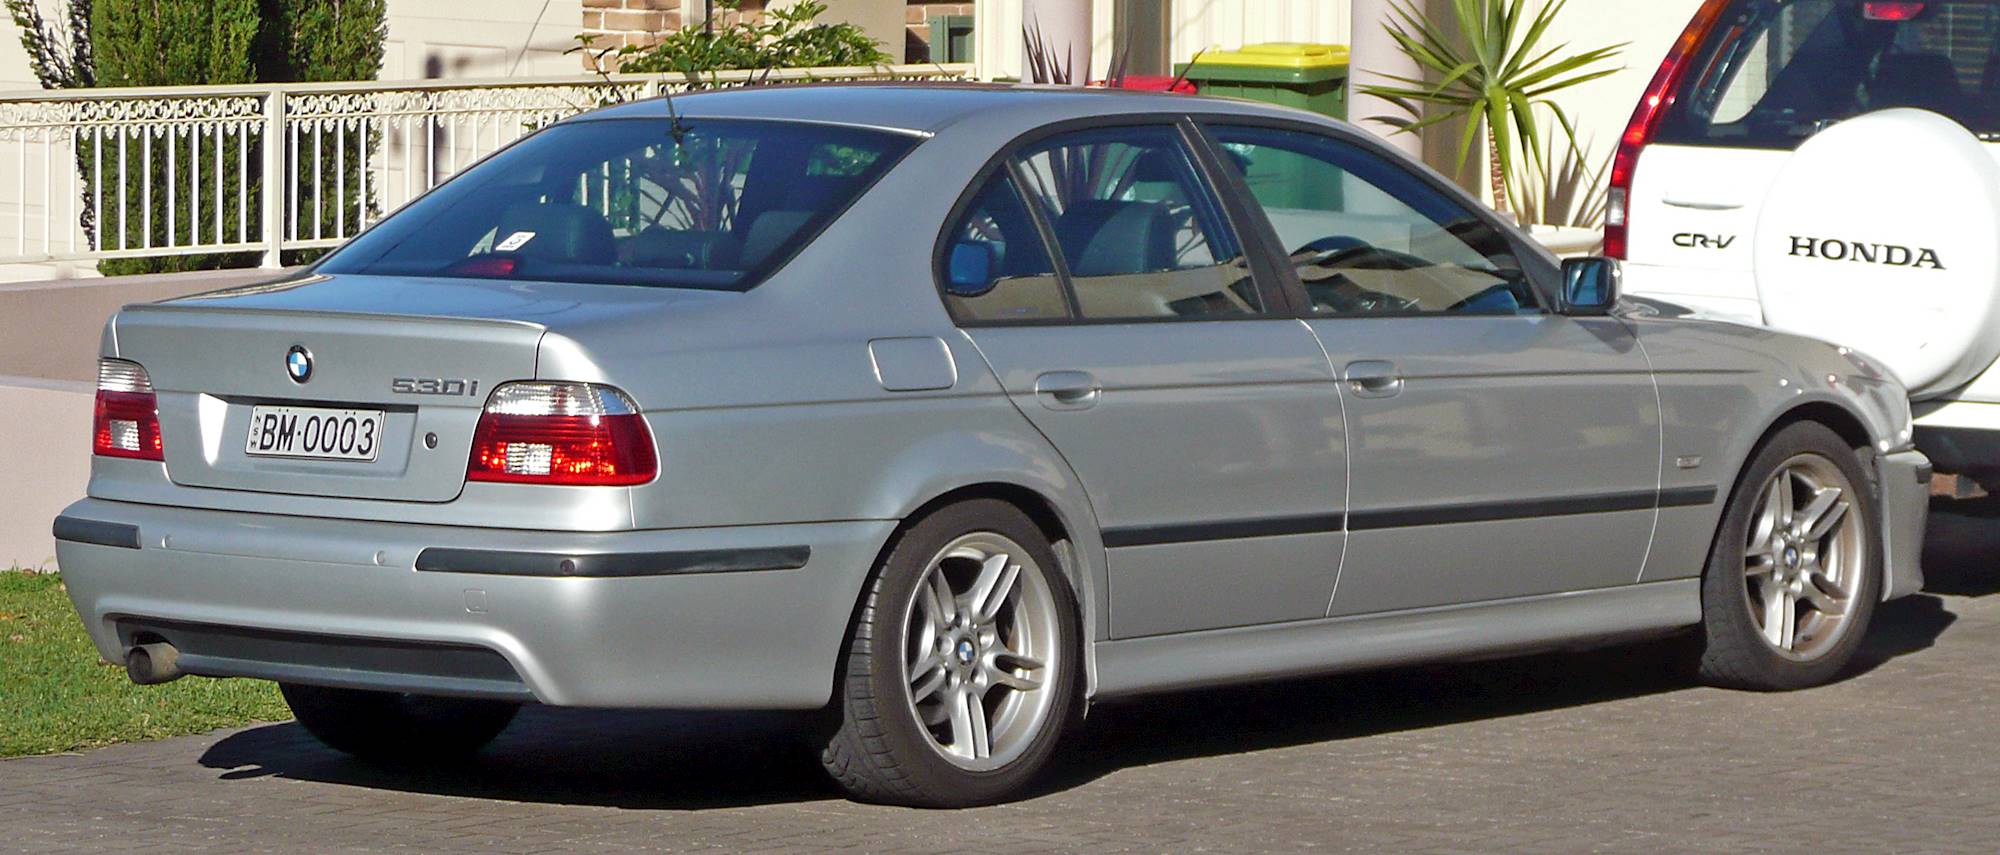 2003 BMW 530 i 4dr Sedan 5-spd manual